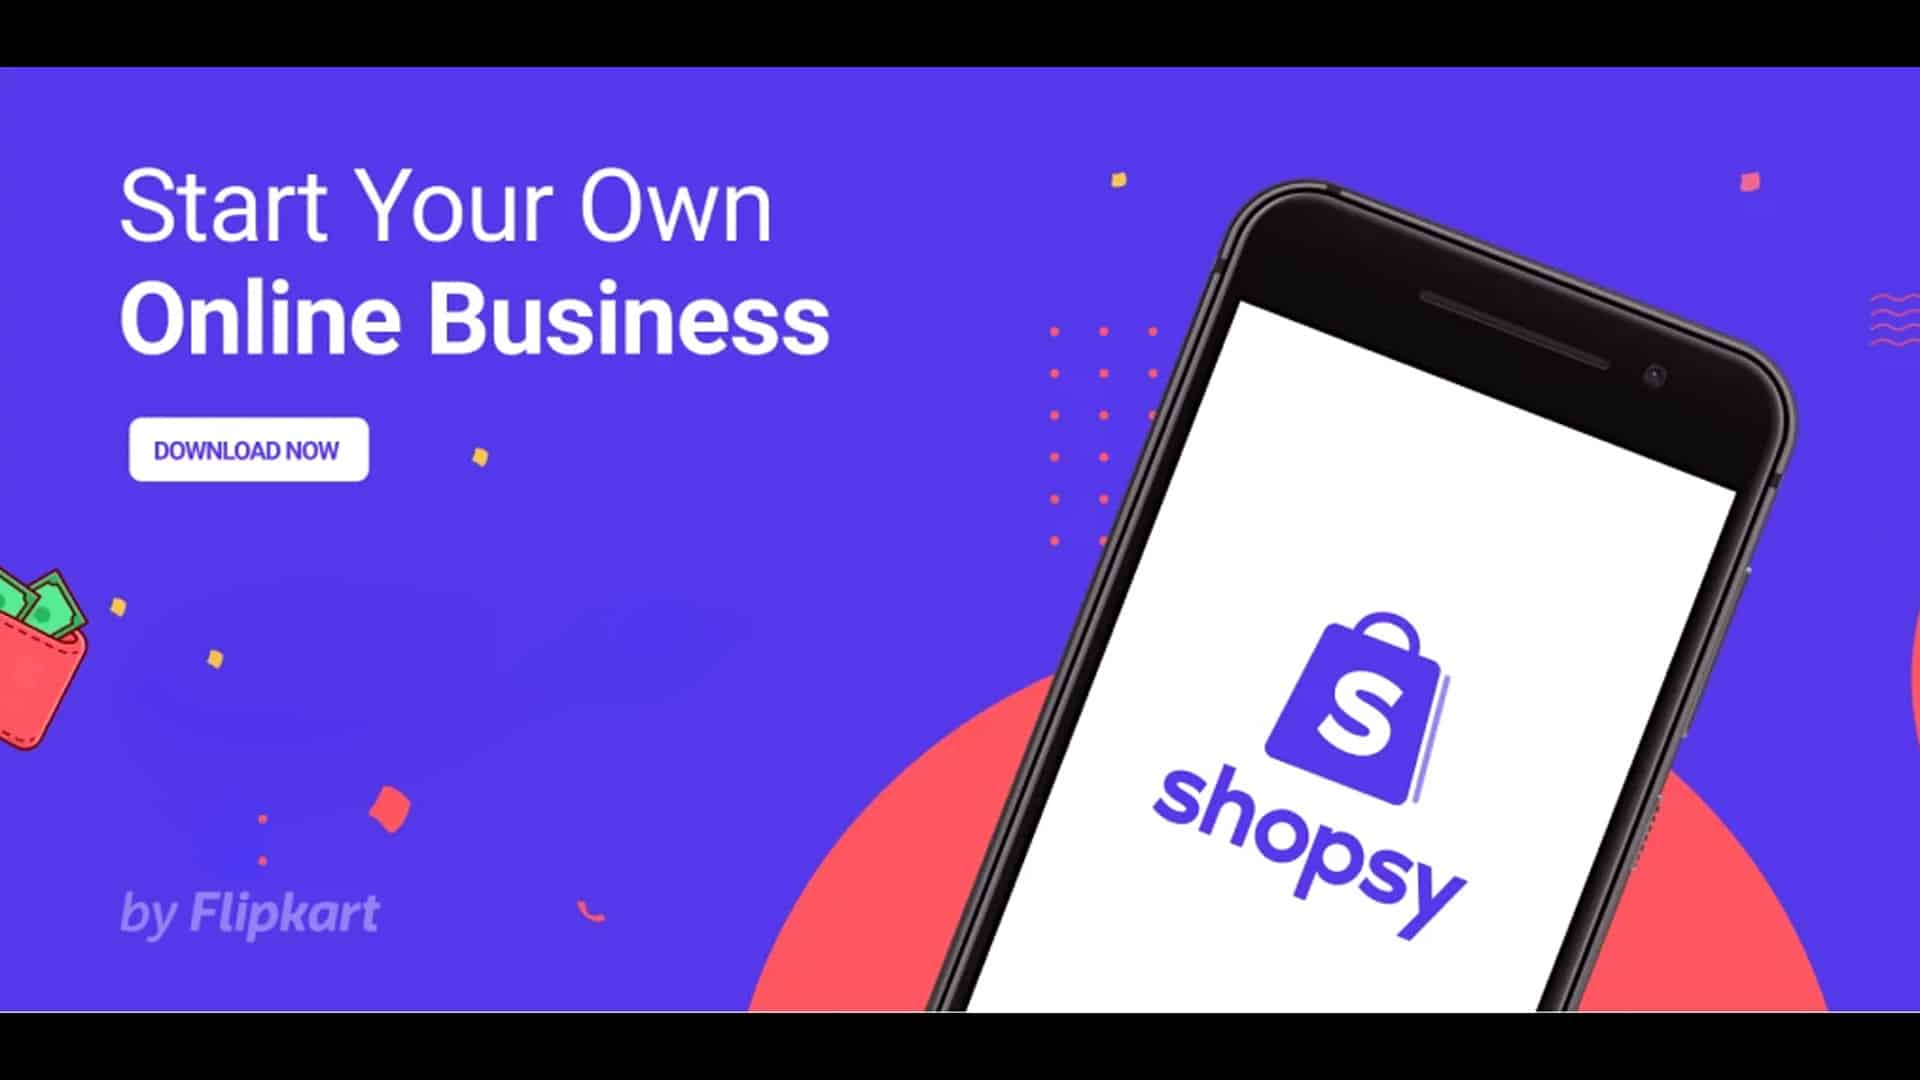 Flipkart launches app 'Shopsy' to boost local entrepreneurship